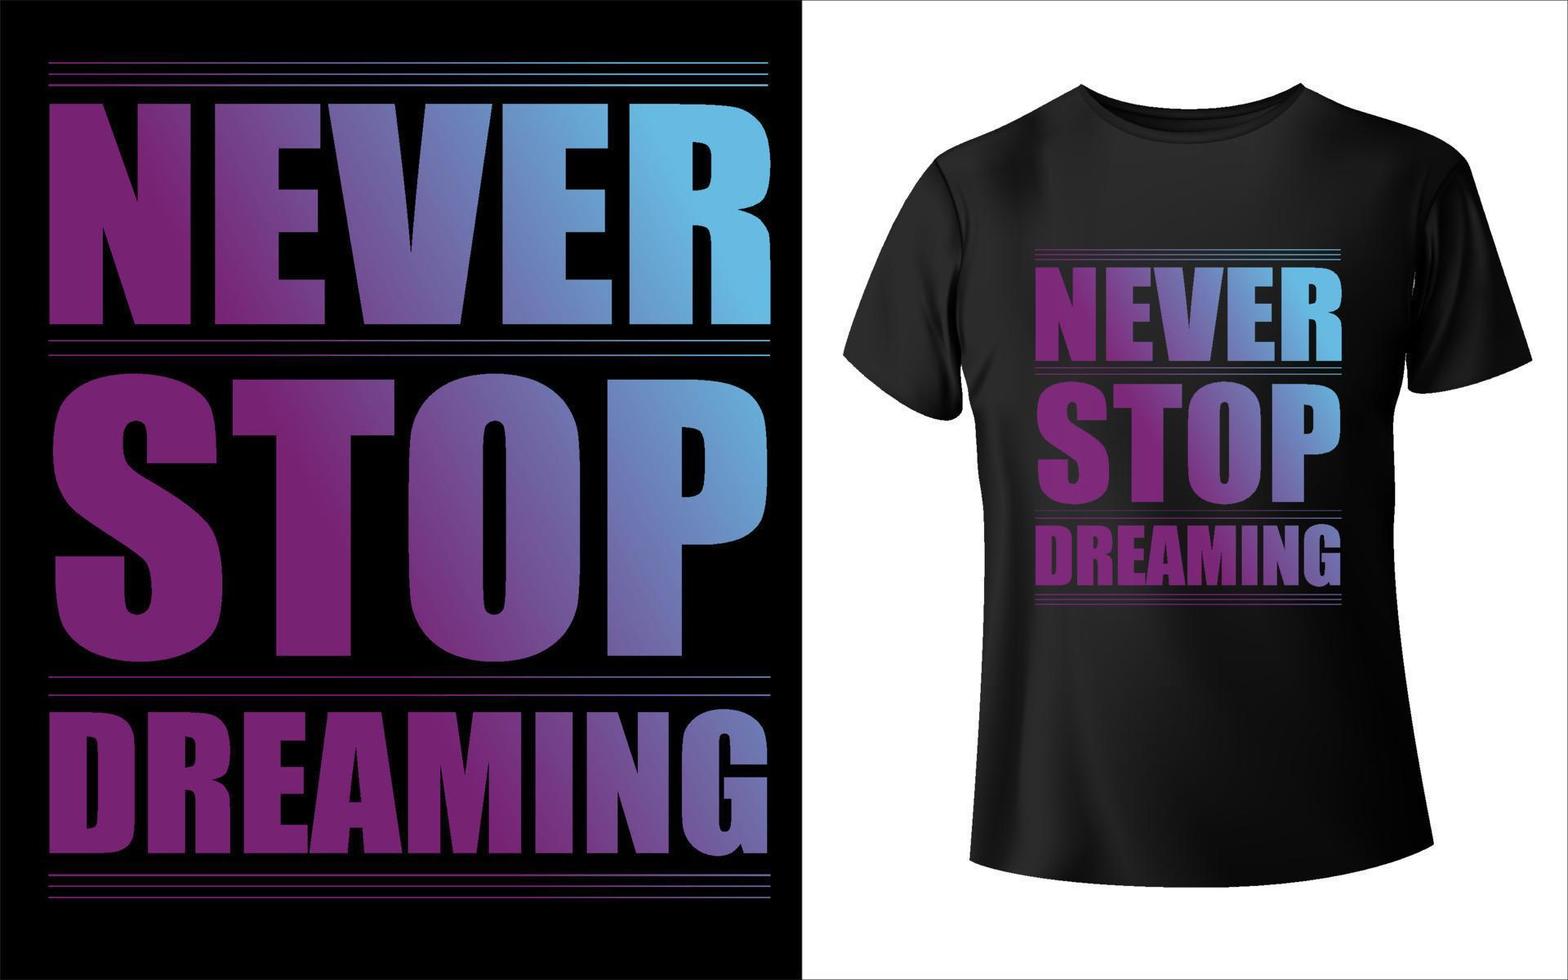 Never stop dreaming t-shirt design vector